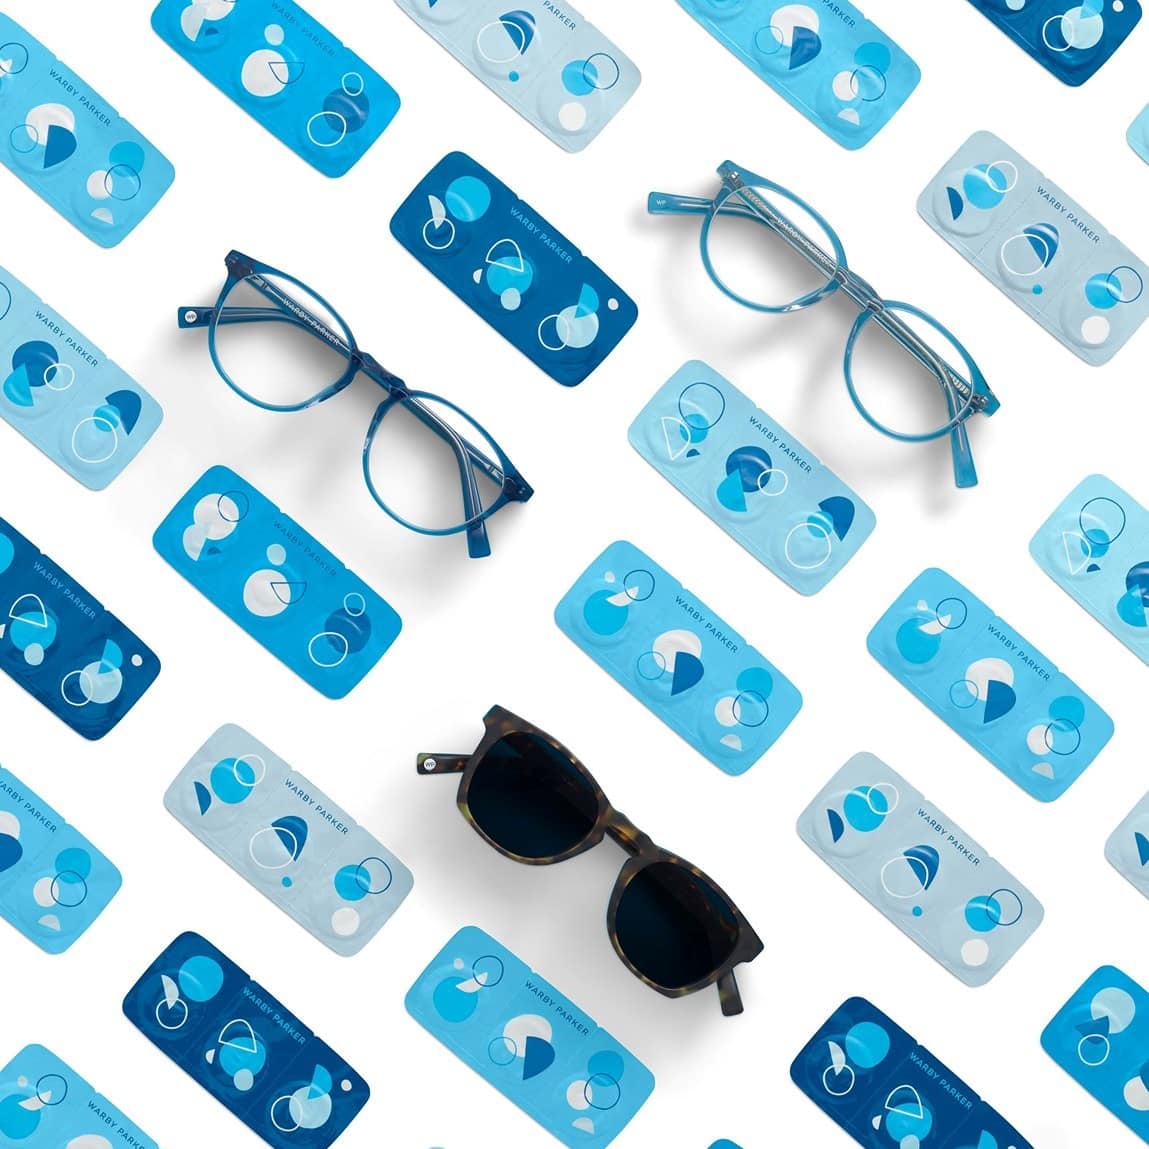 Jabuka bljesak vijenac  Warby Parker Glasses Review - Must Read This Before Buying